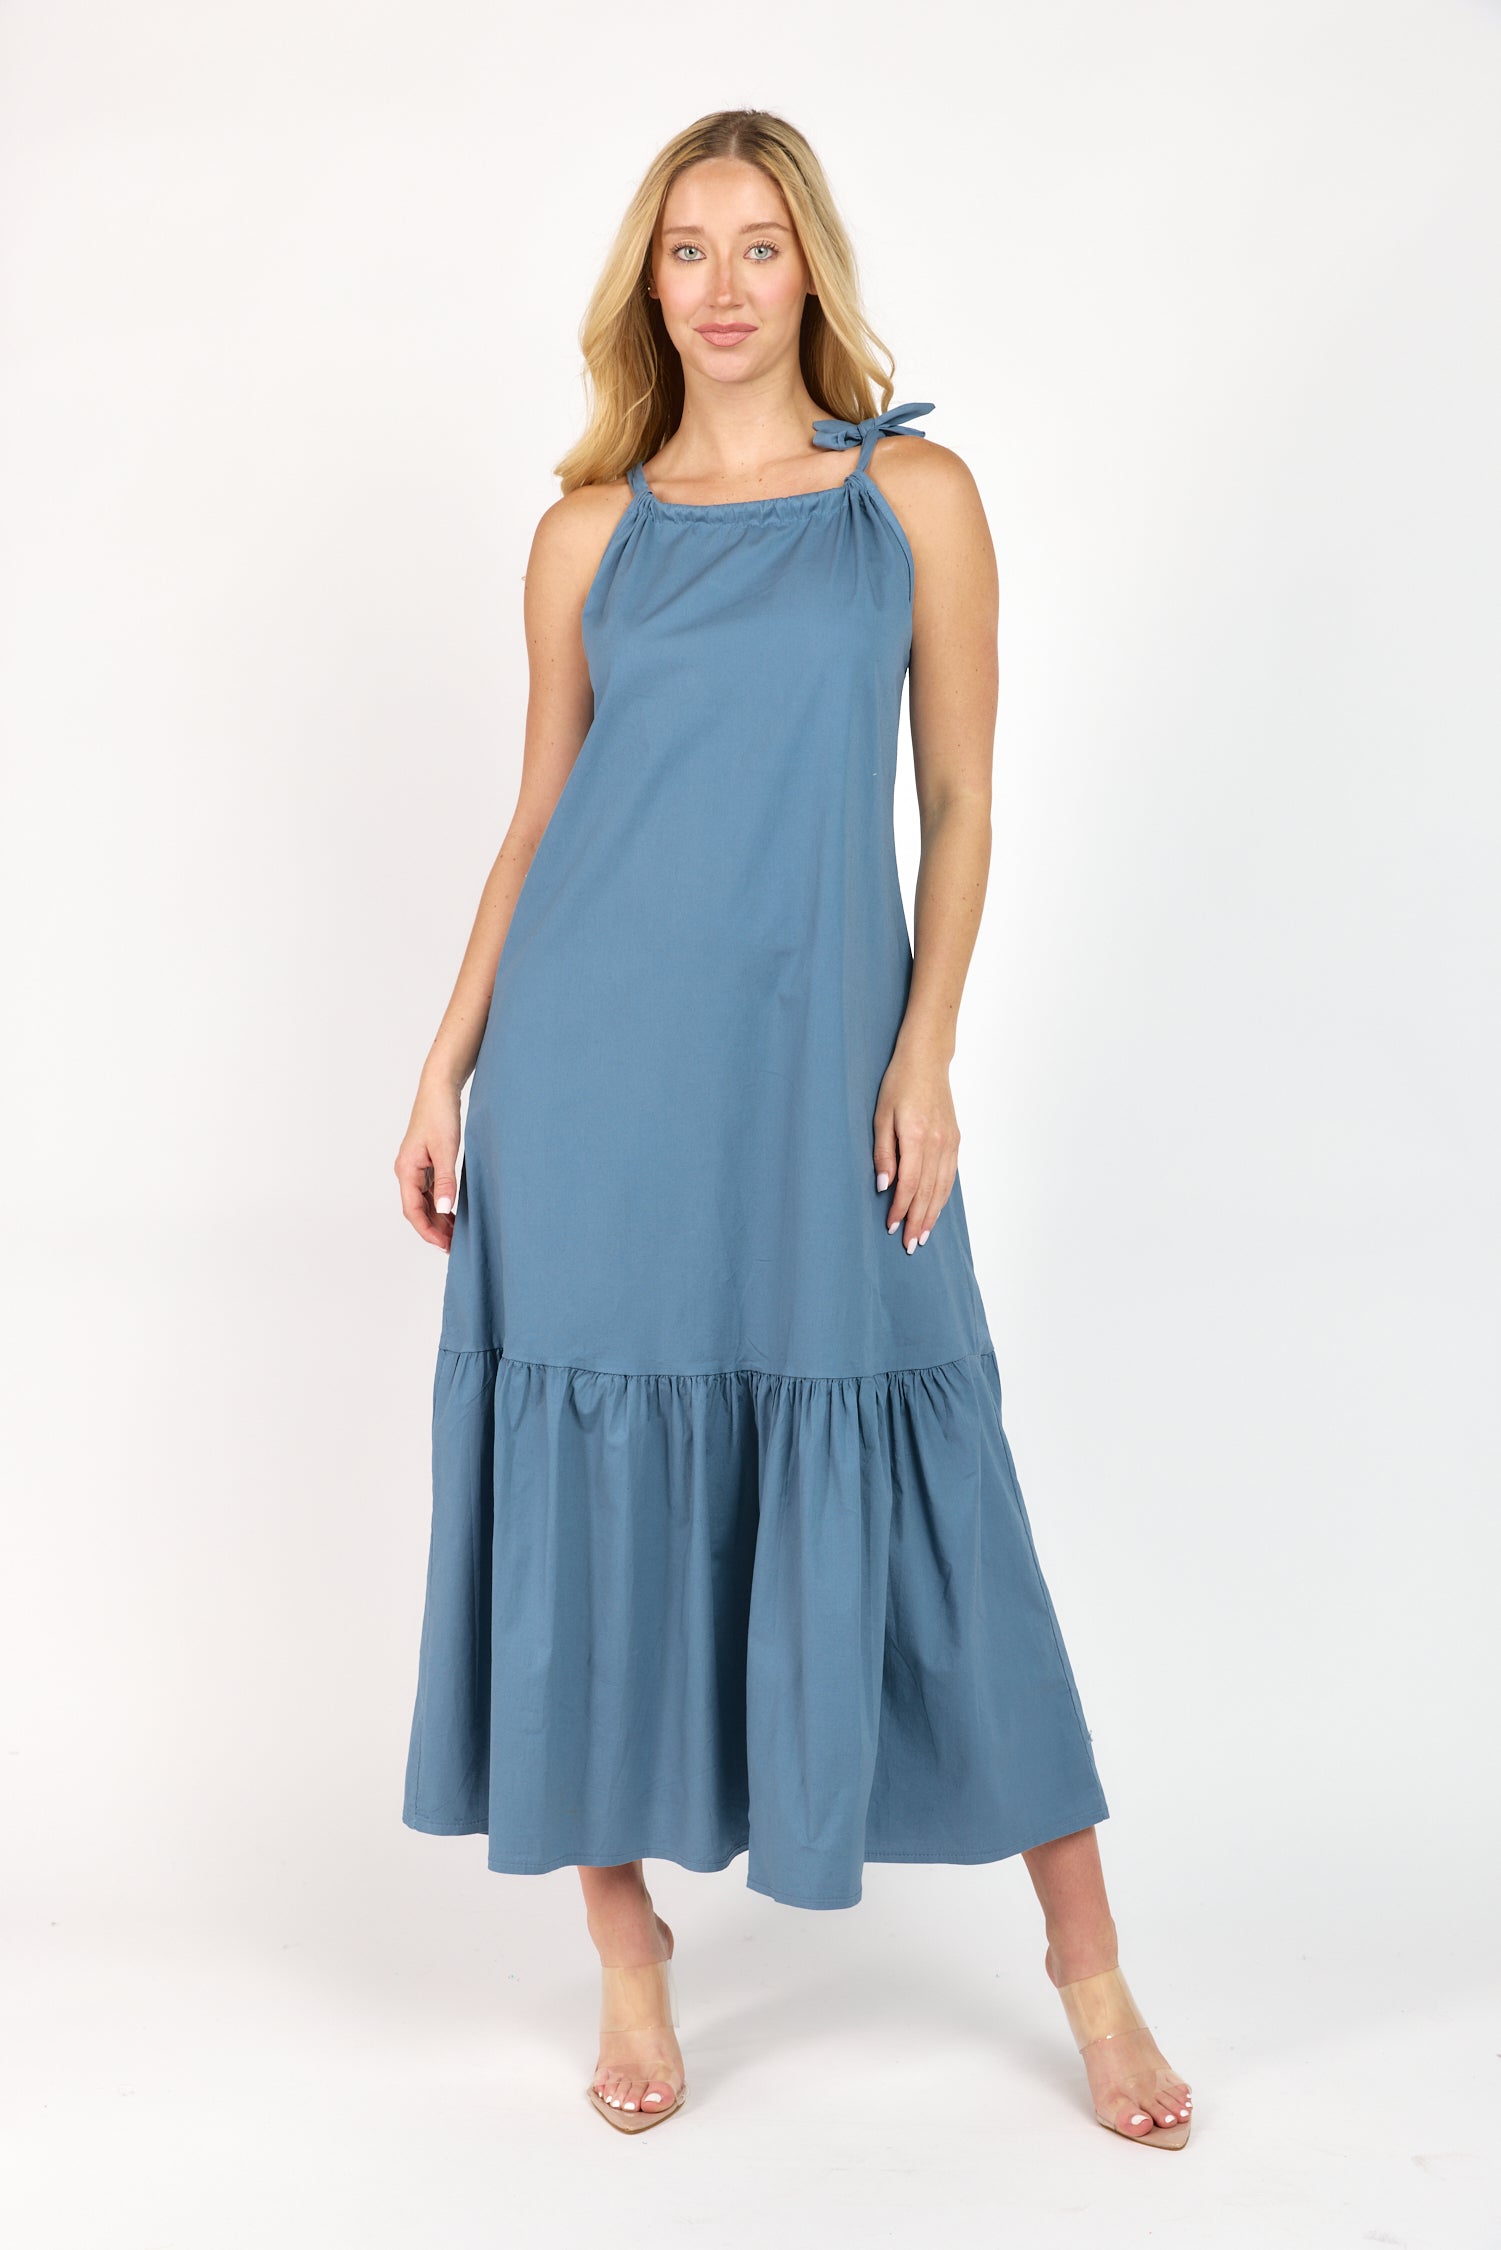 SAMANTHA | Dresses | Cotton, Dresses, Maxi Dress, maxi-dresses | shop-sofia